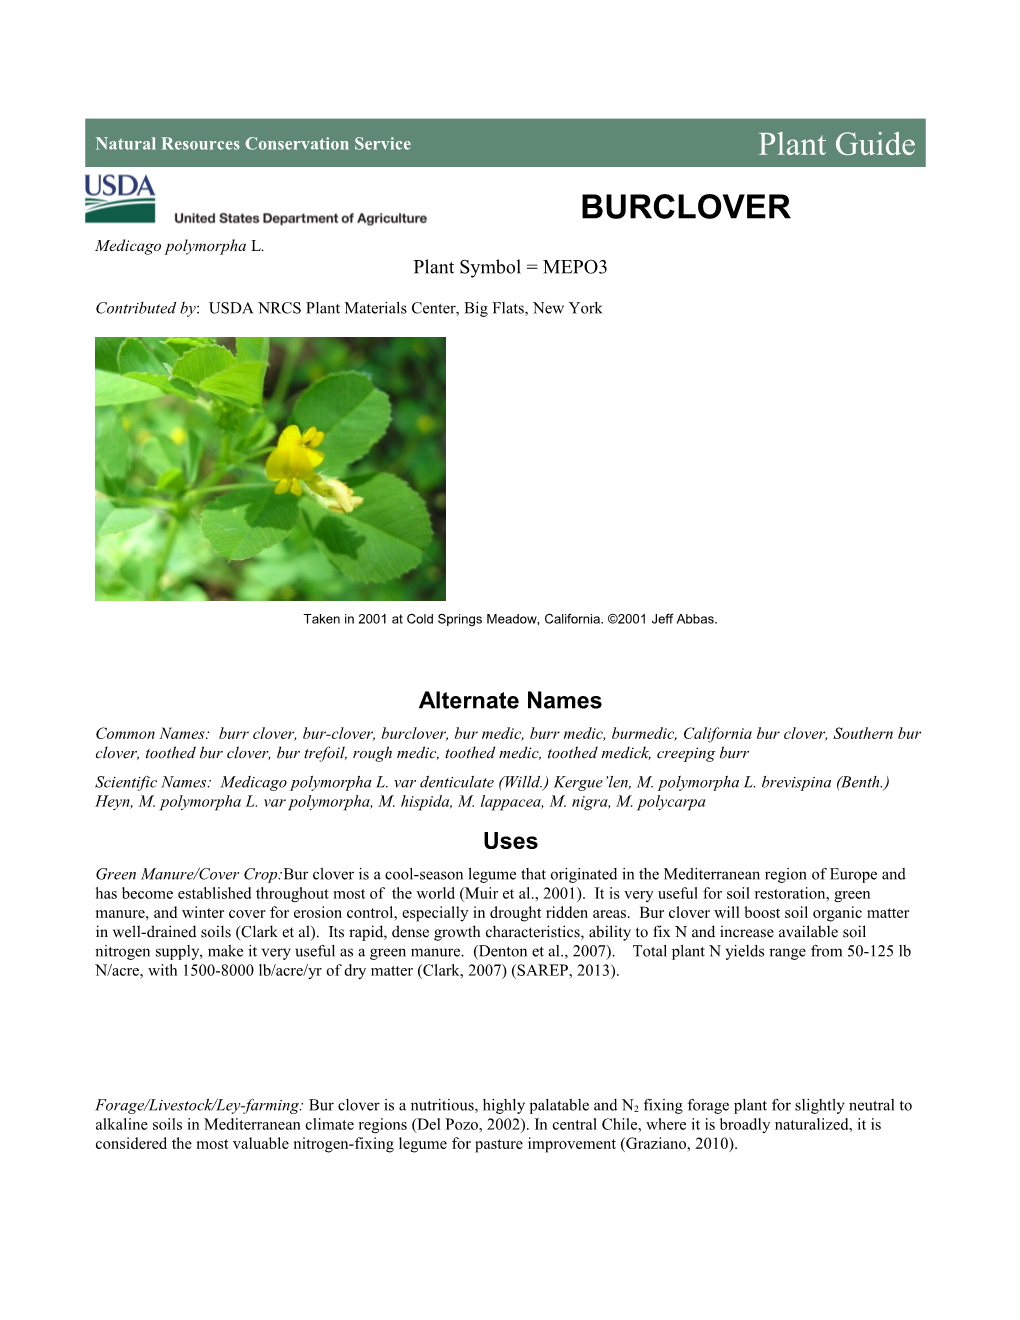 Bur Clover (Medicago Polymorpha)